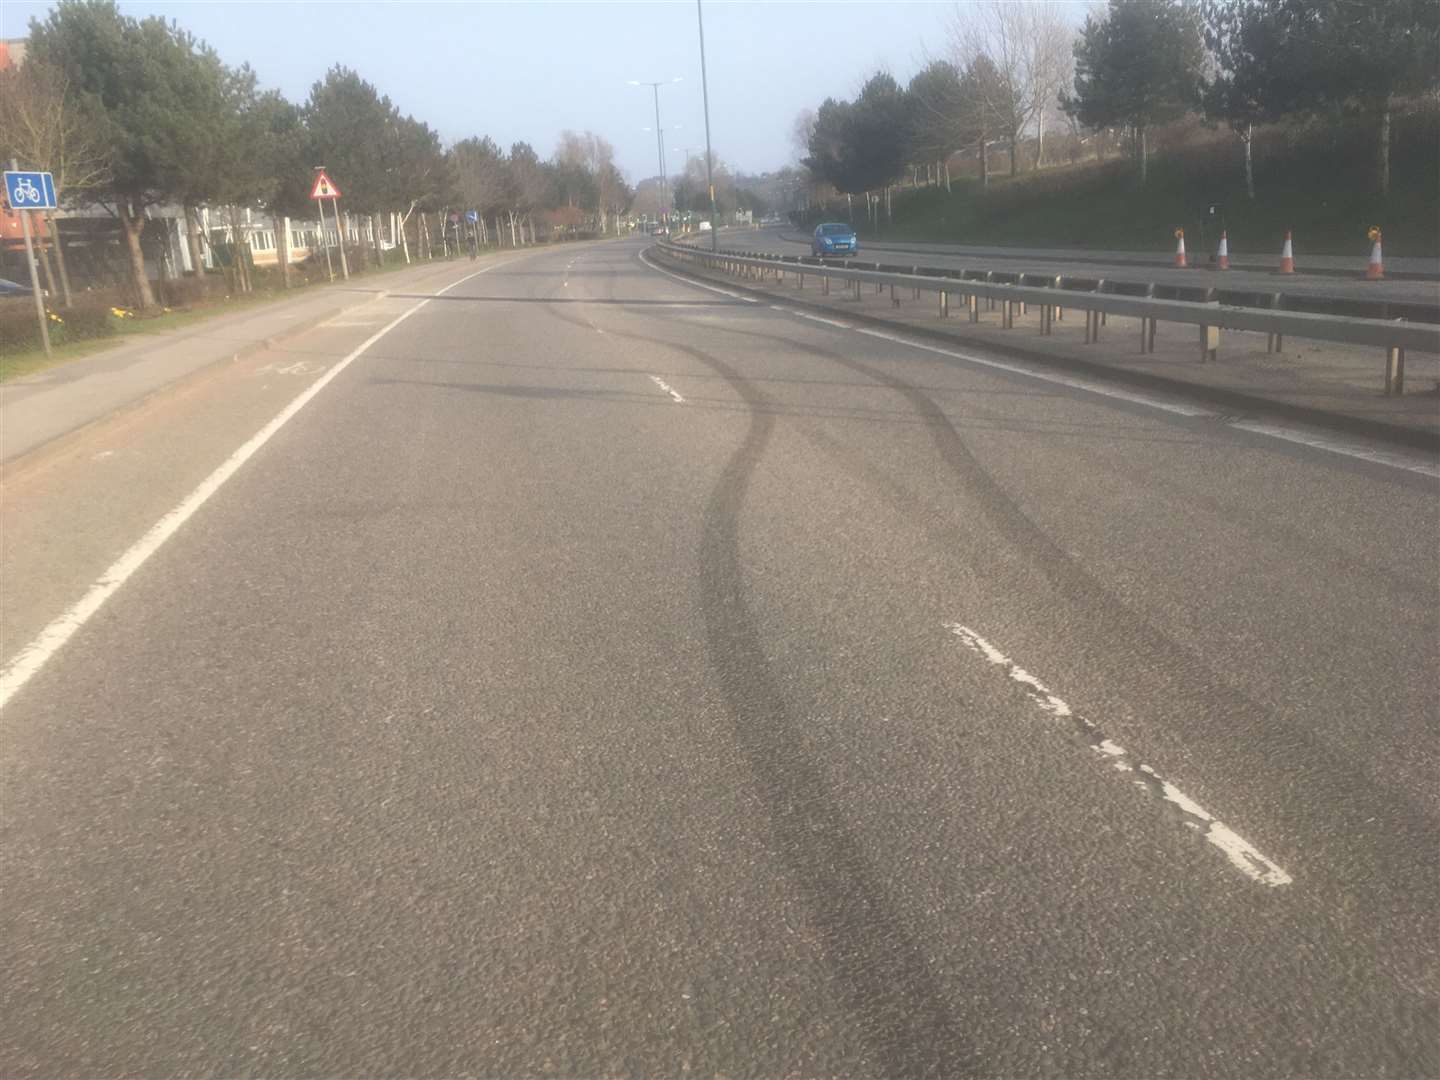 Tyre marks have been left in the road in Crossways Boulevard